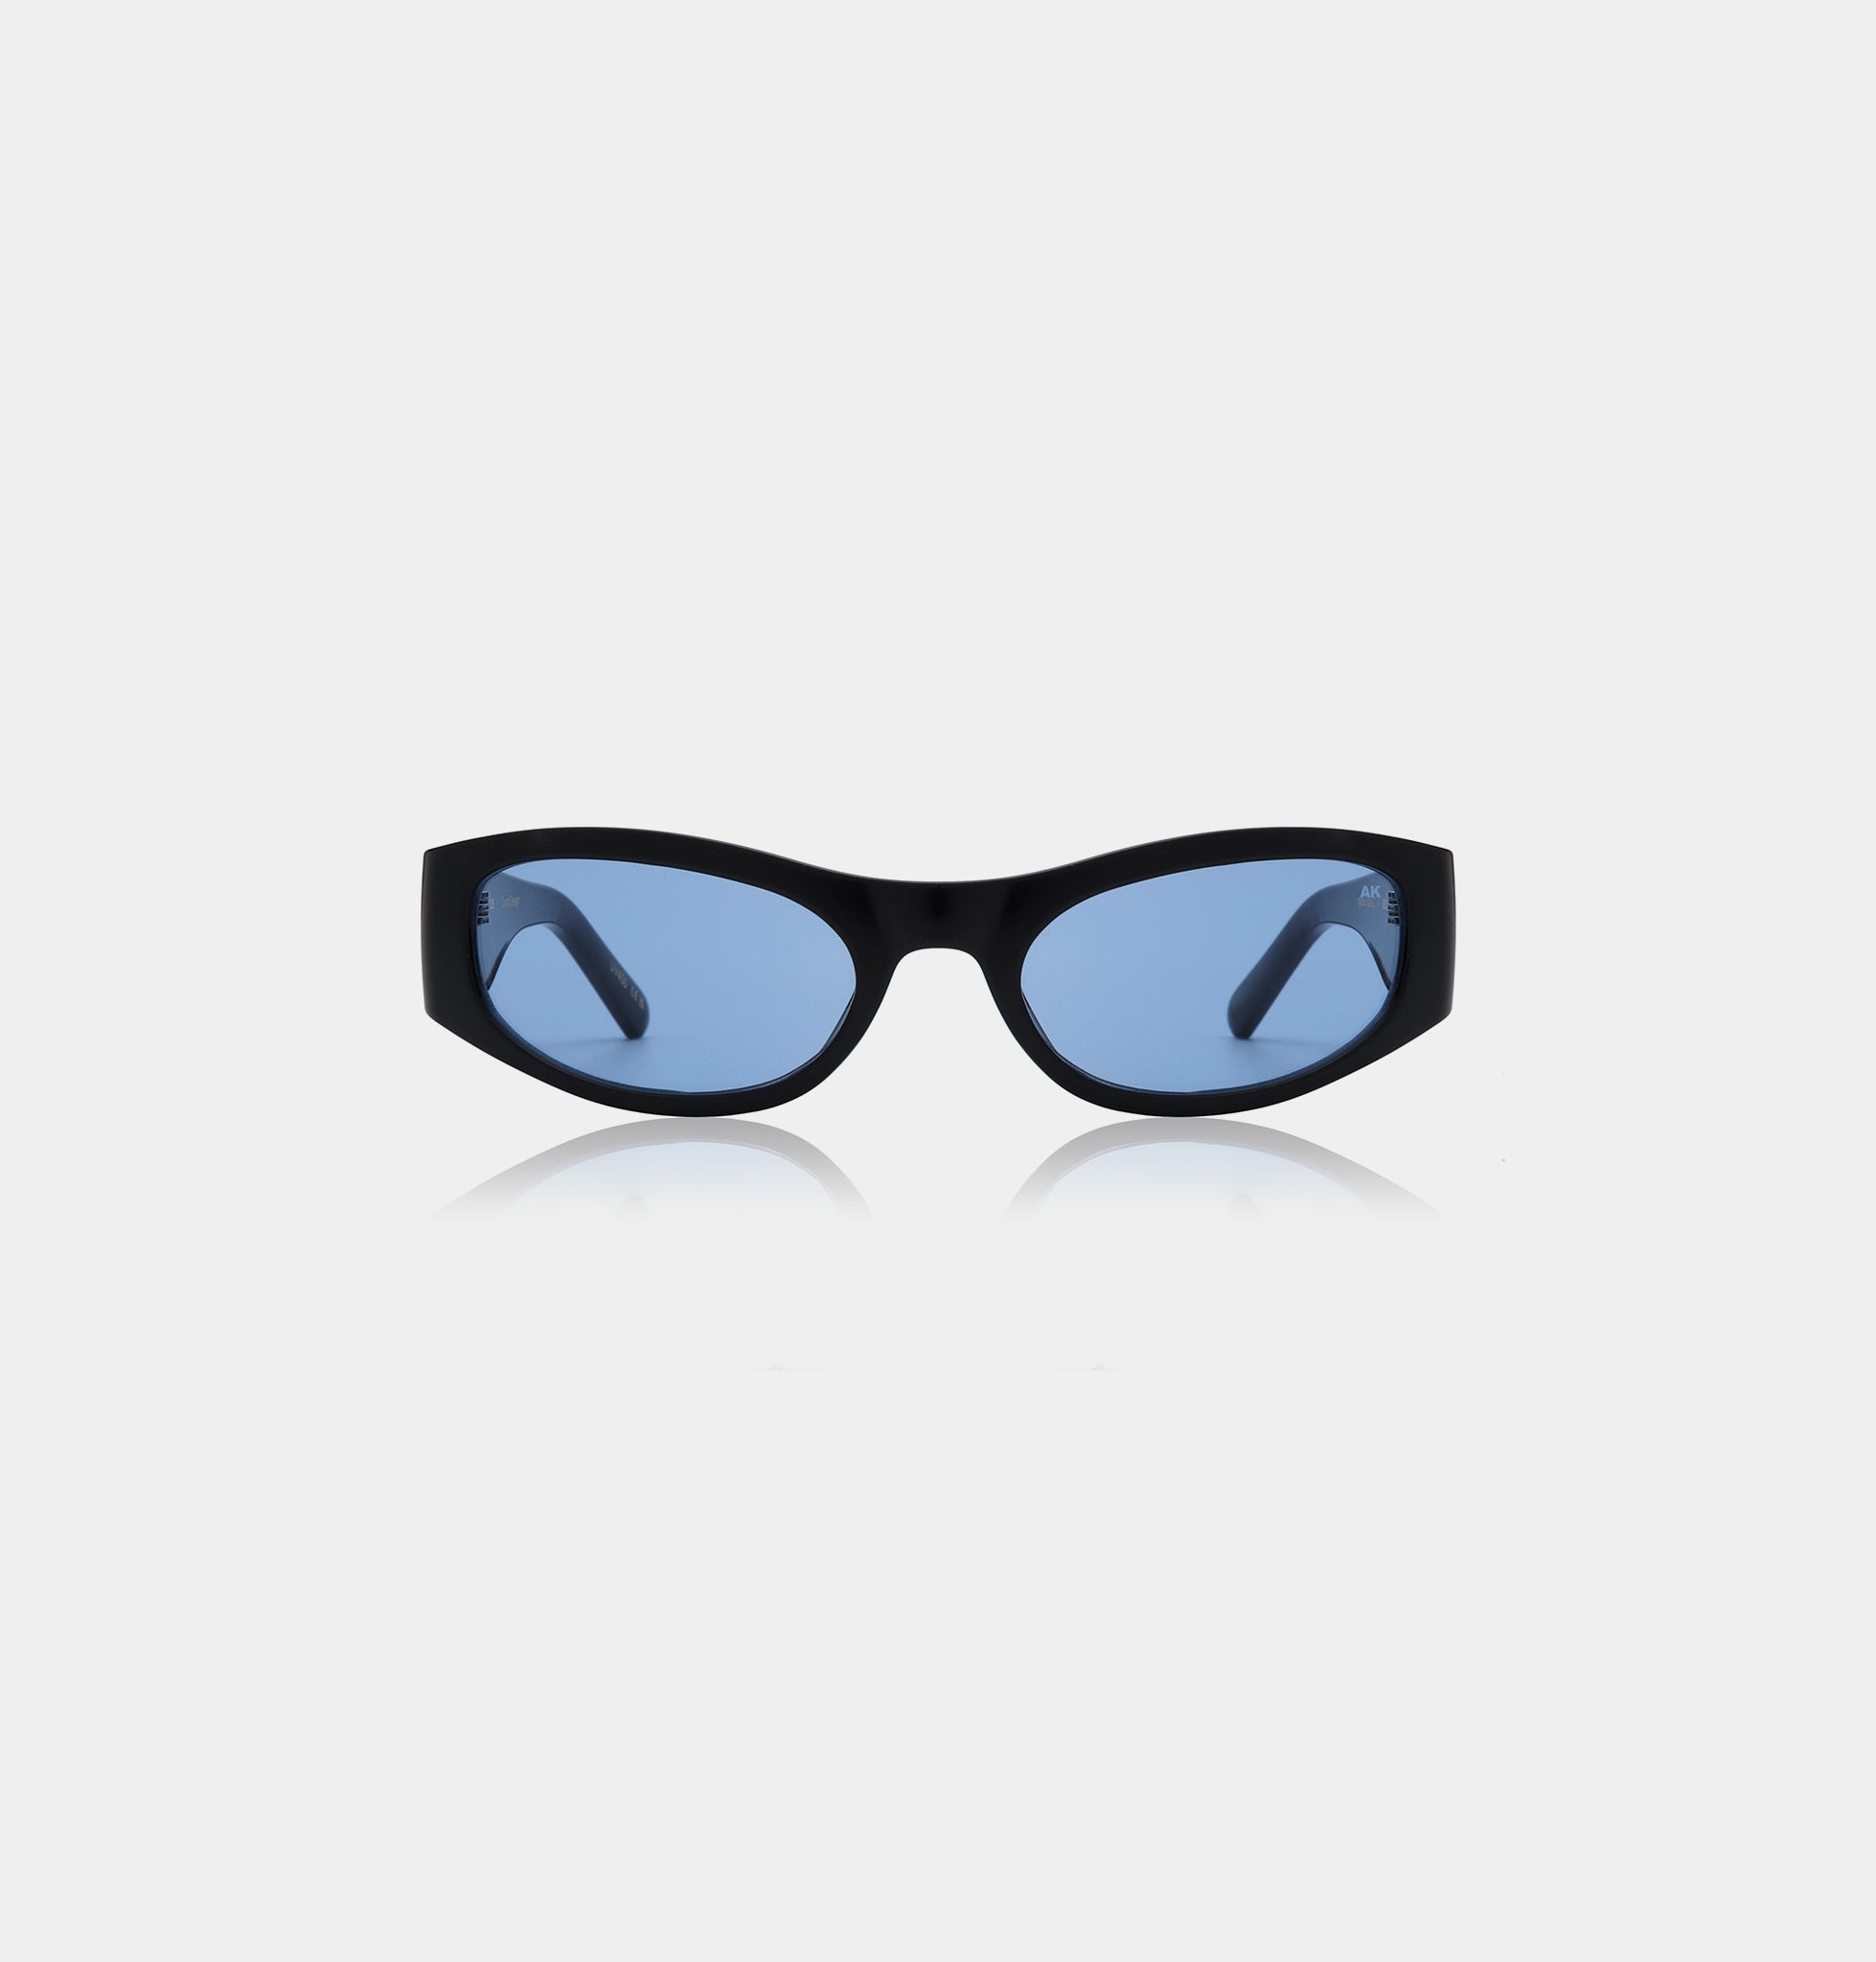 Gust Sunglasses - Black / Blue